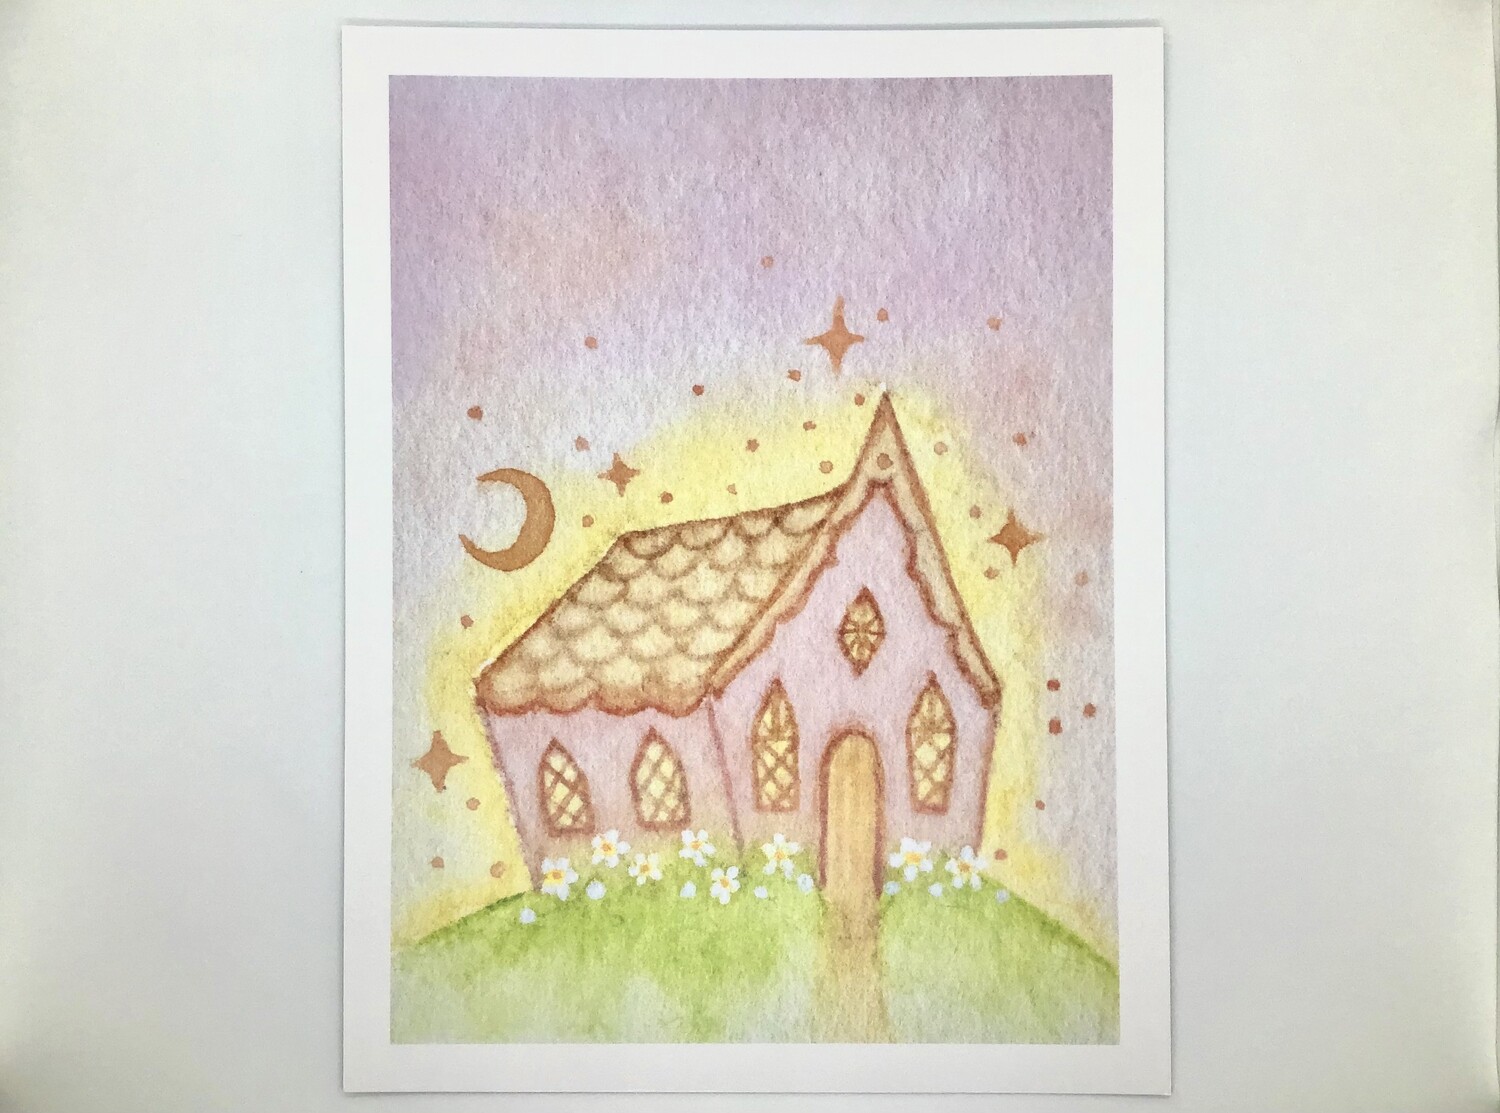 Fairytale Cottage Limited Edition Print